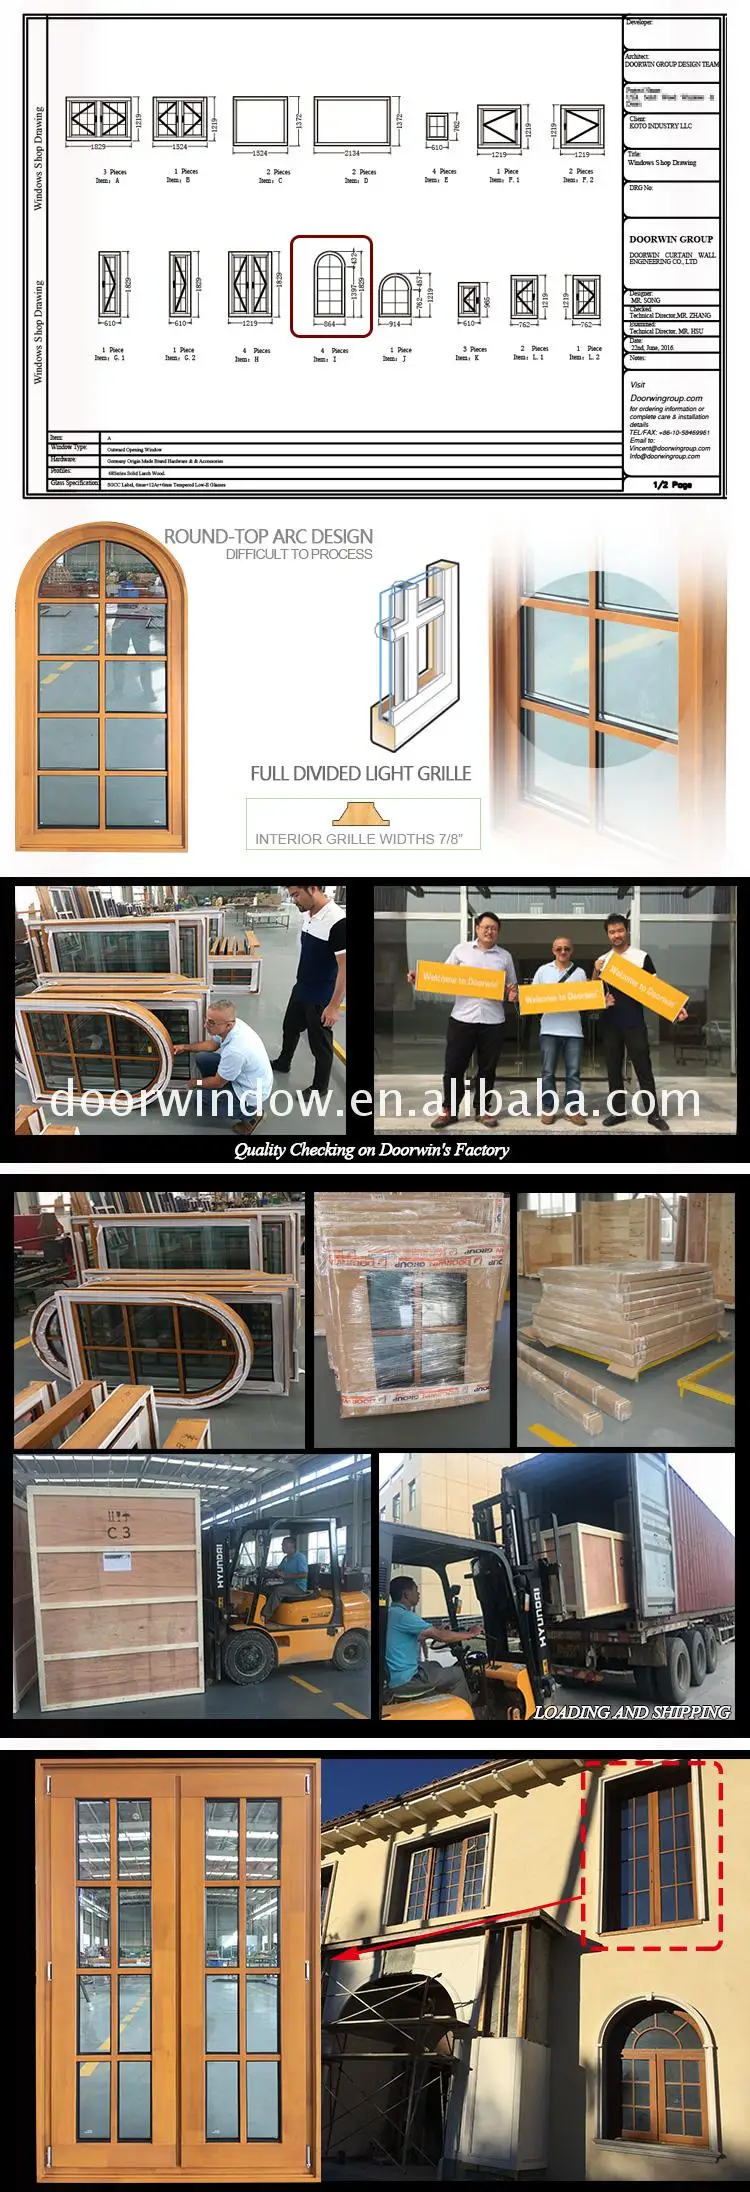 Window grill models design india for aluminum low e glass windows